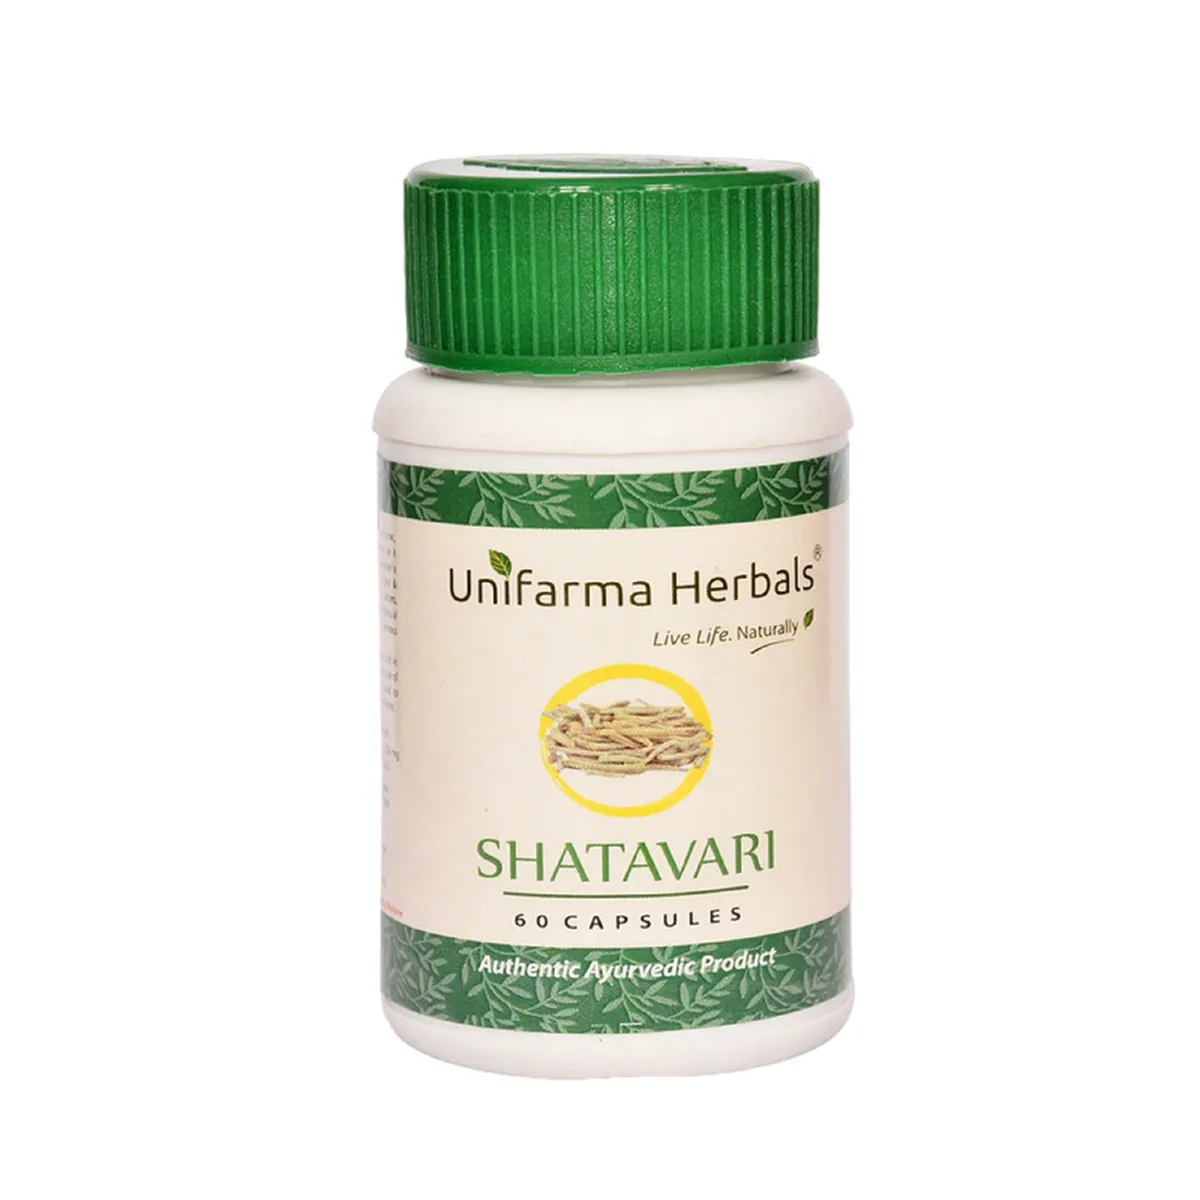 Unifarma Herbals Shatavari 60caps